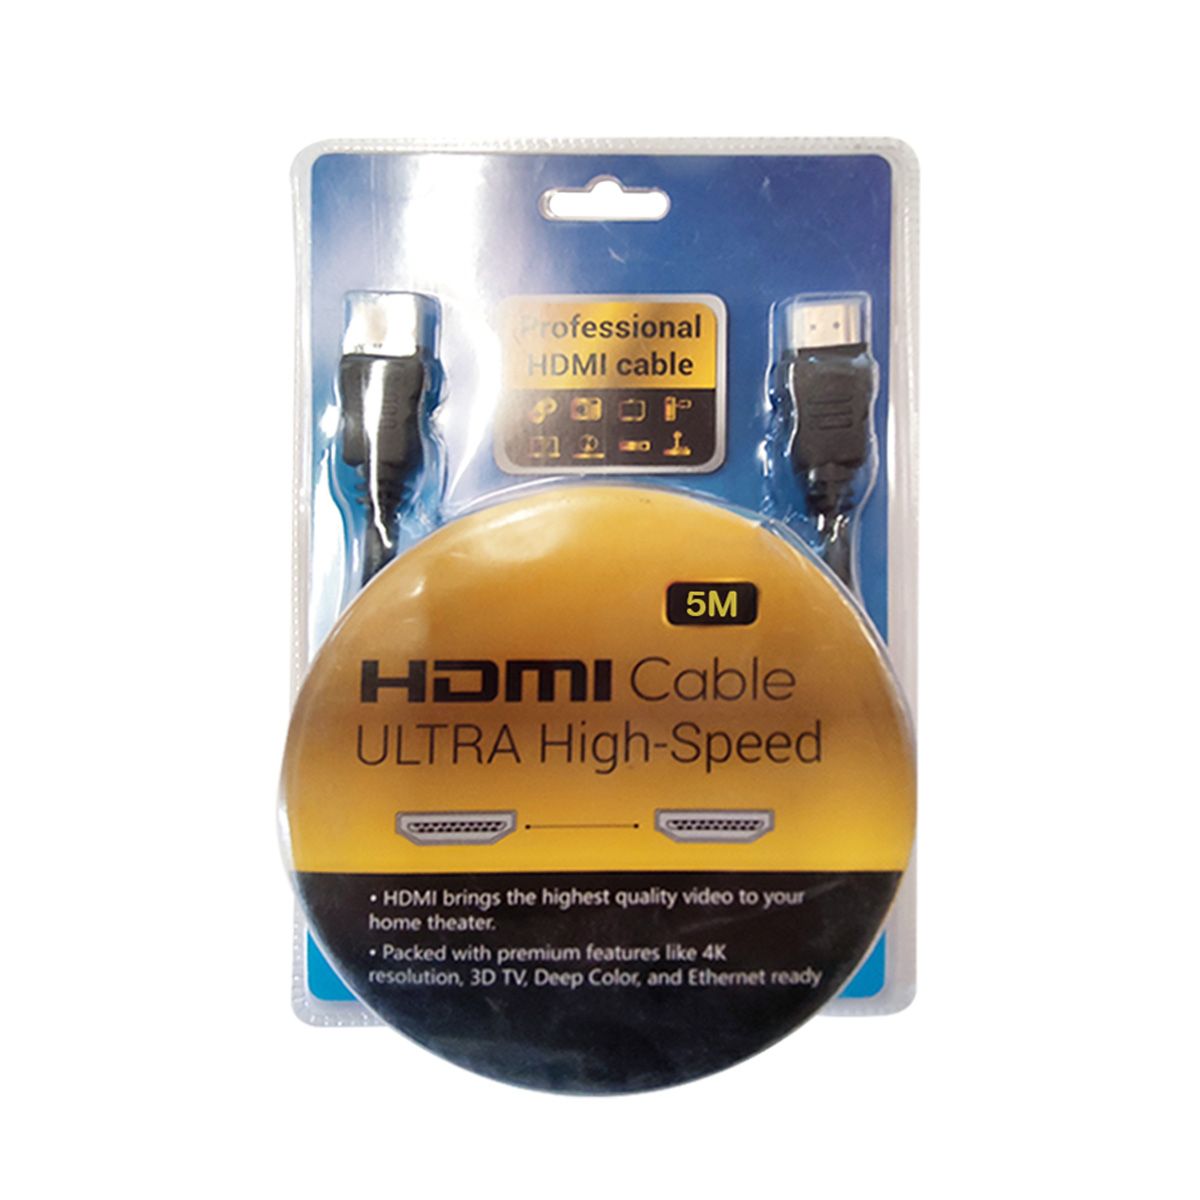 NANO สาย HDMI CABLE ULTRA HIGH SPEED 5M